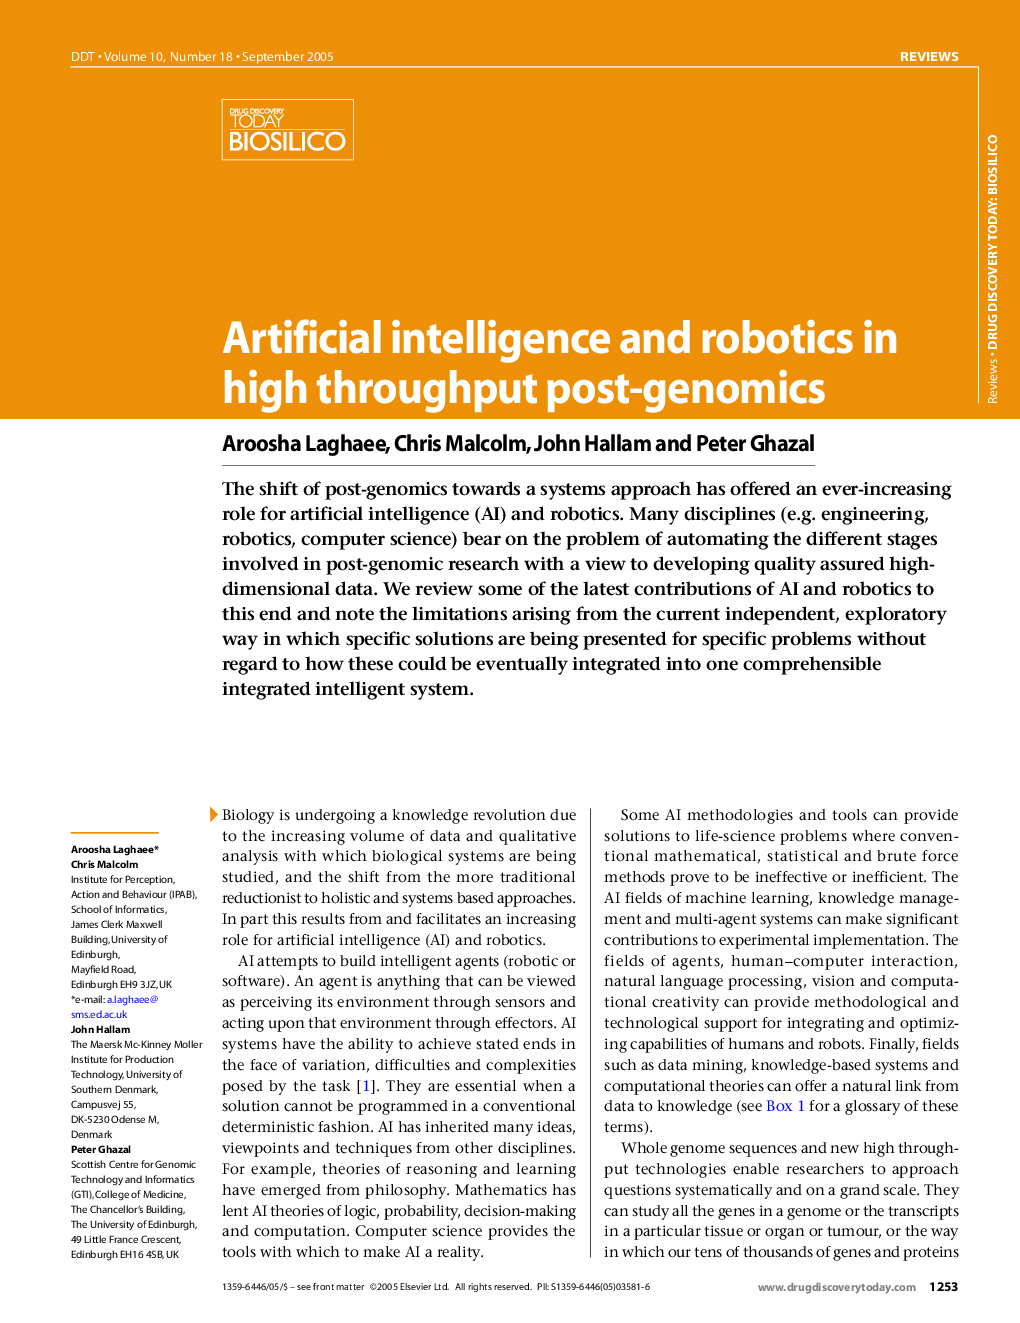 Artificial intelligence and robotics in high throughput post-genomics